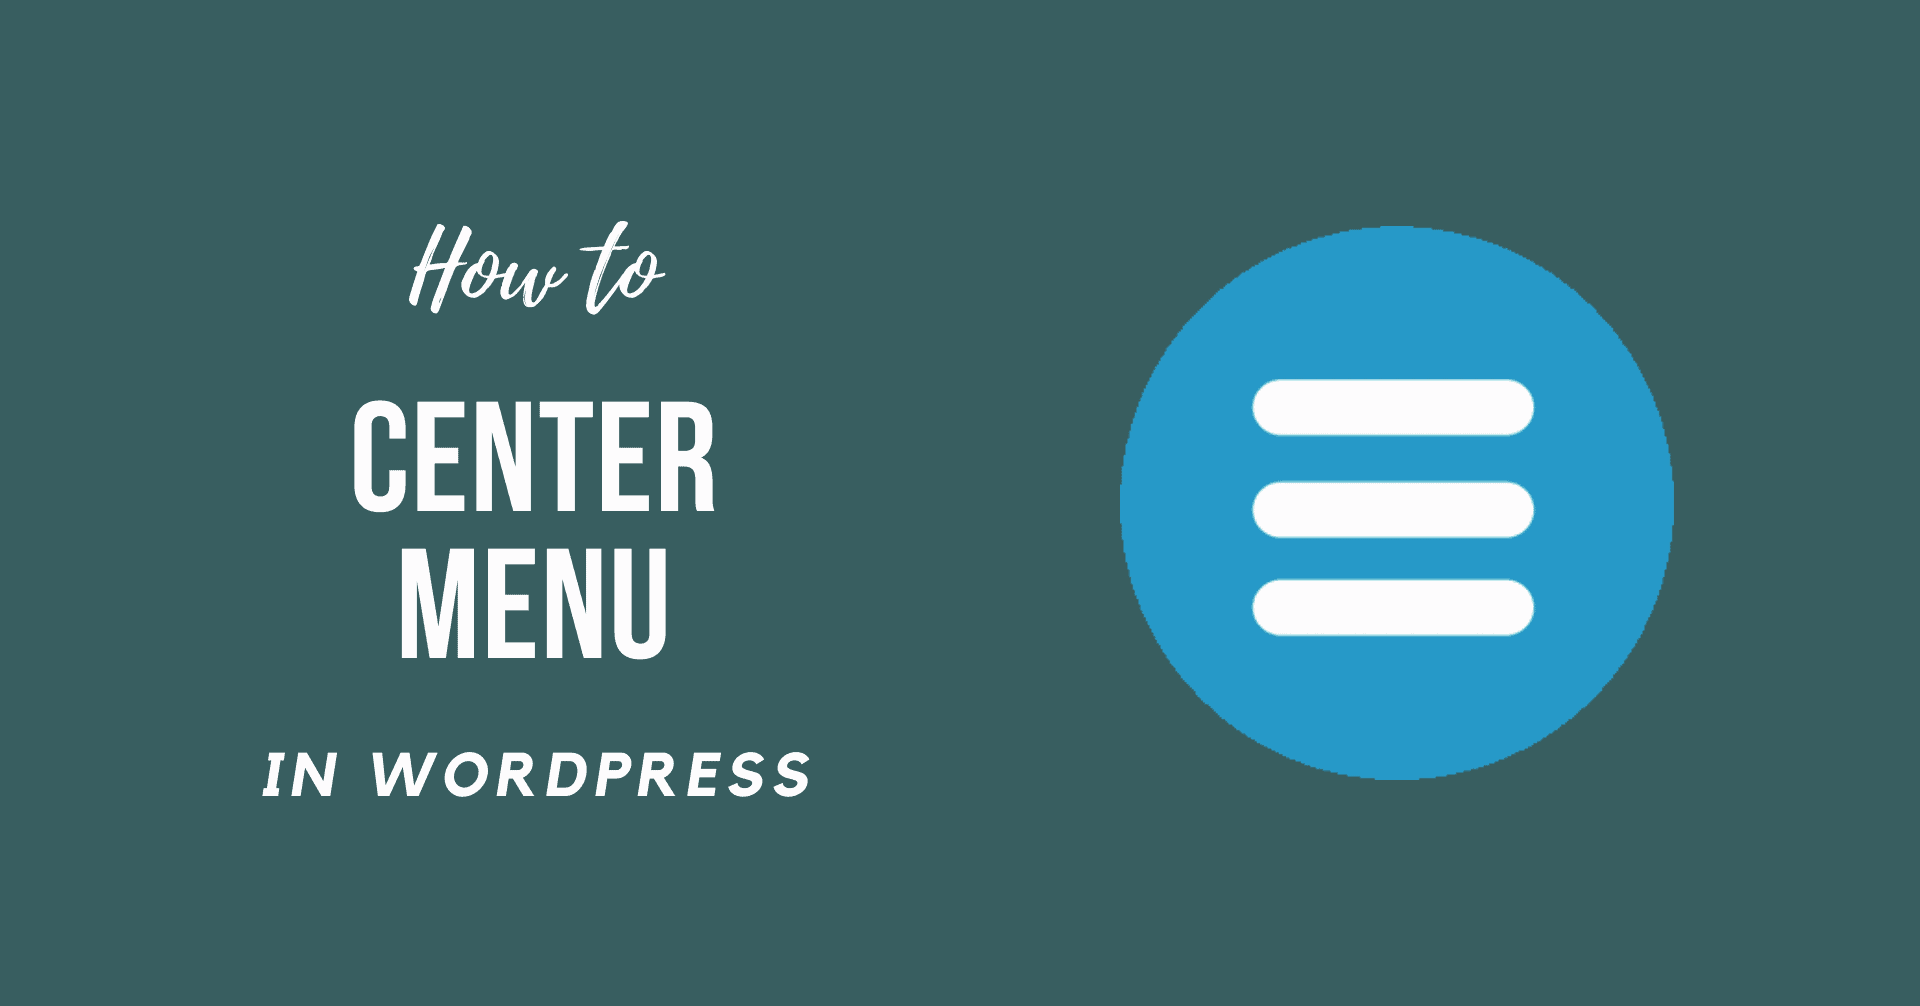 How to Center Menu in WordPress Using CSS